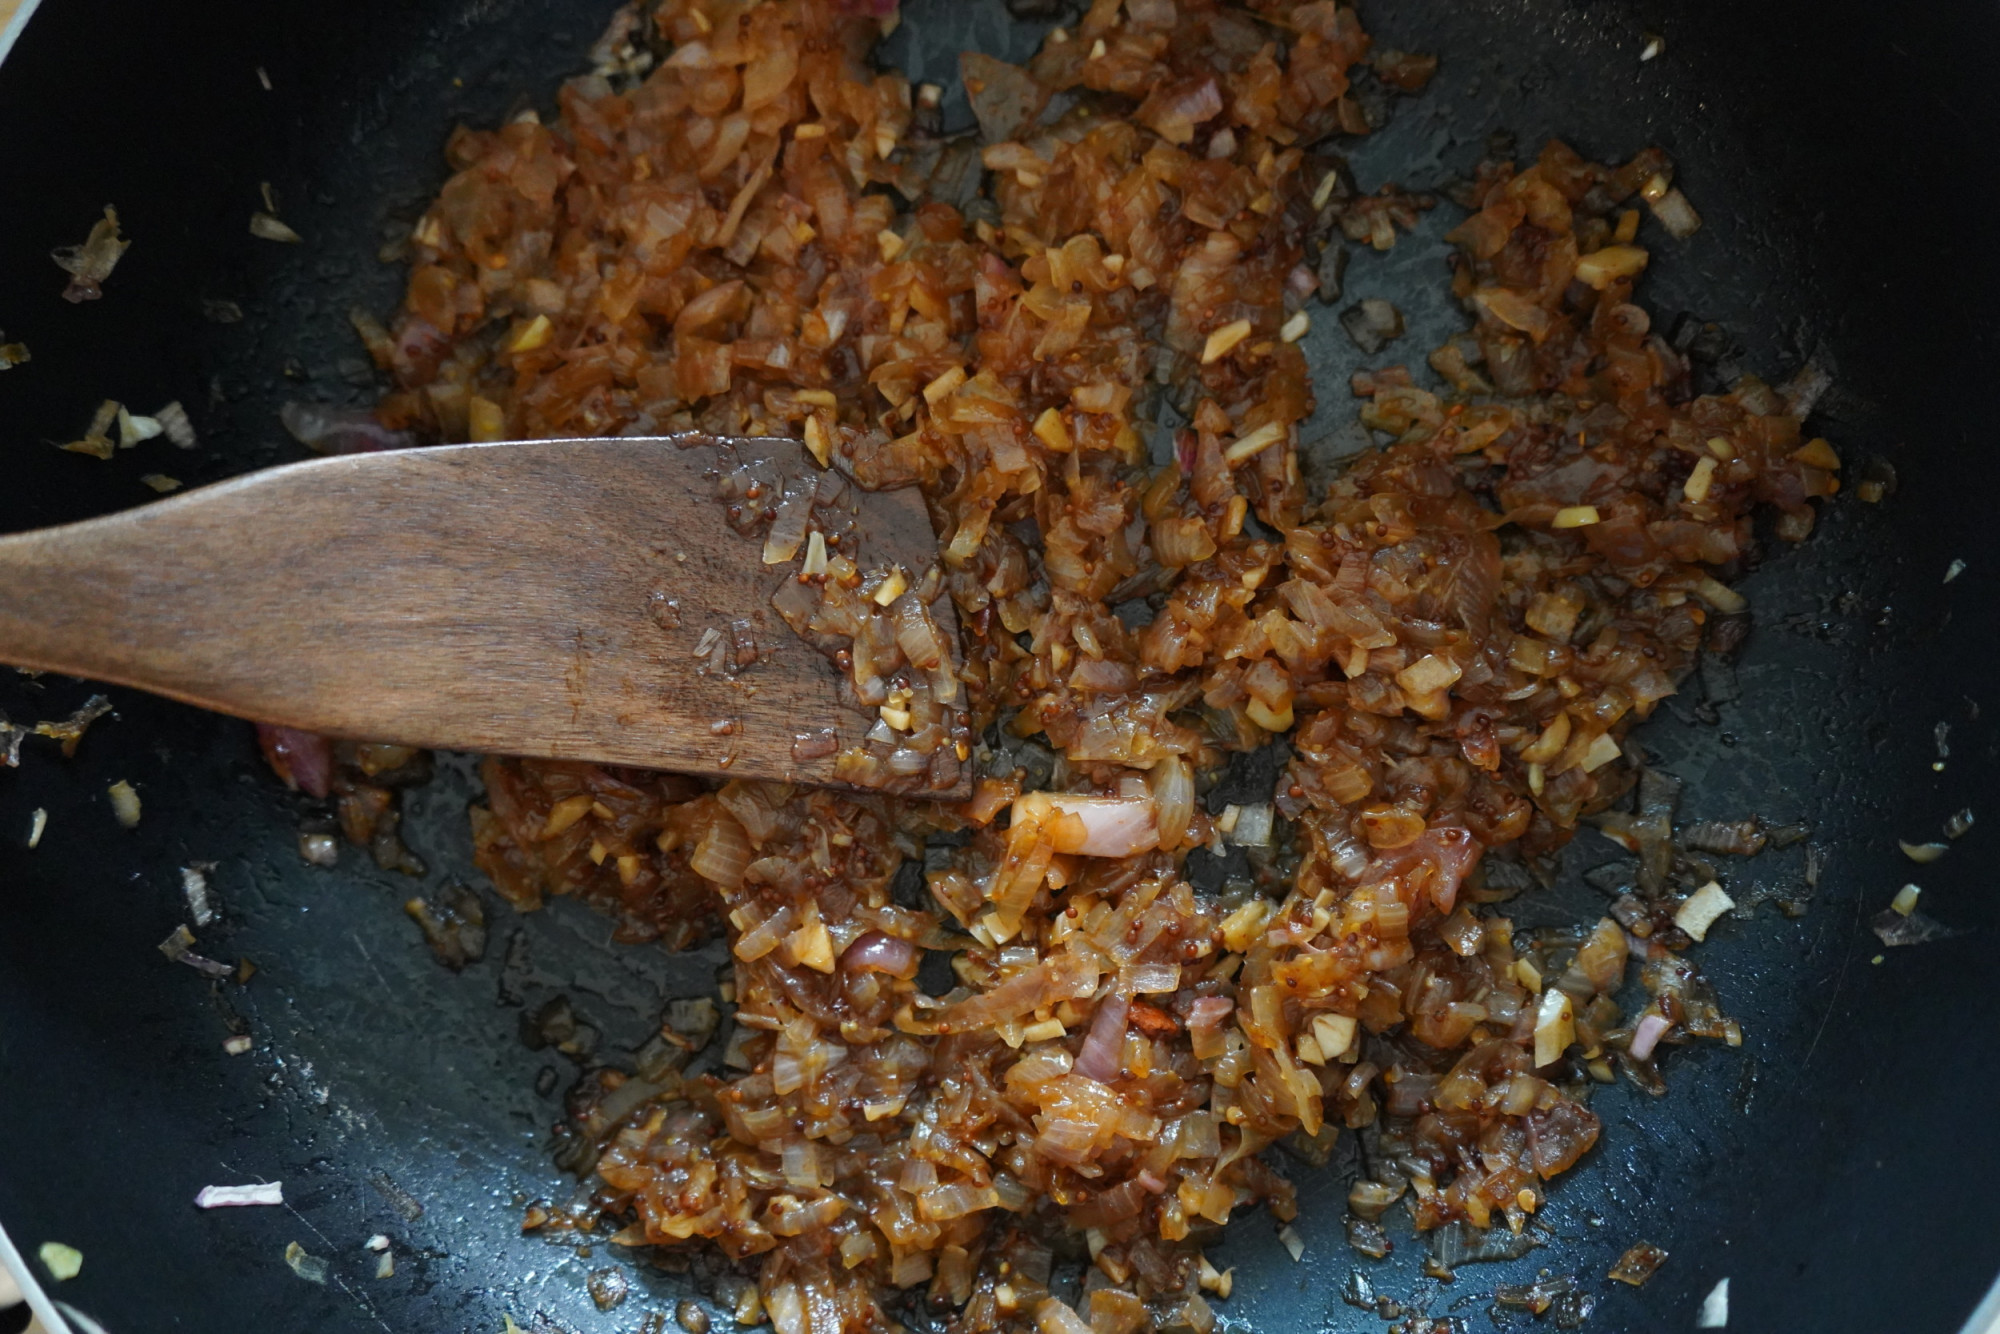 Caramelised onion chutney recipe in the making